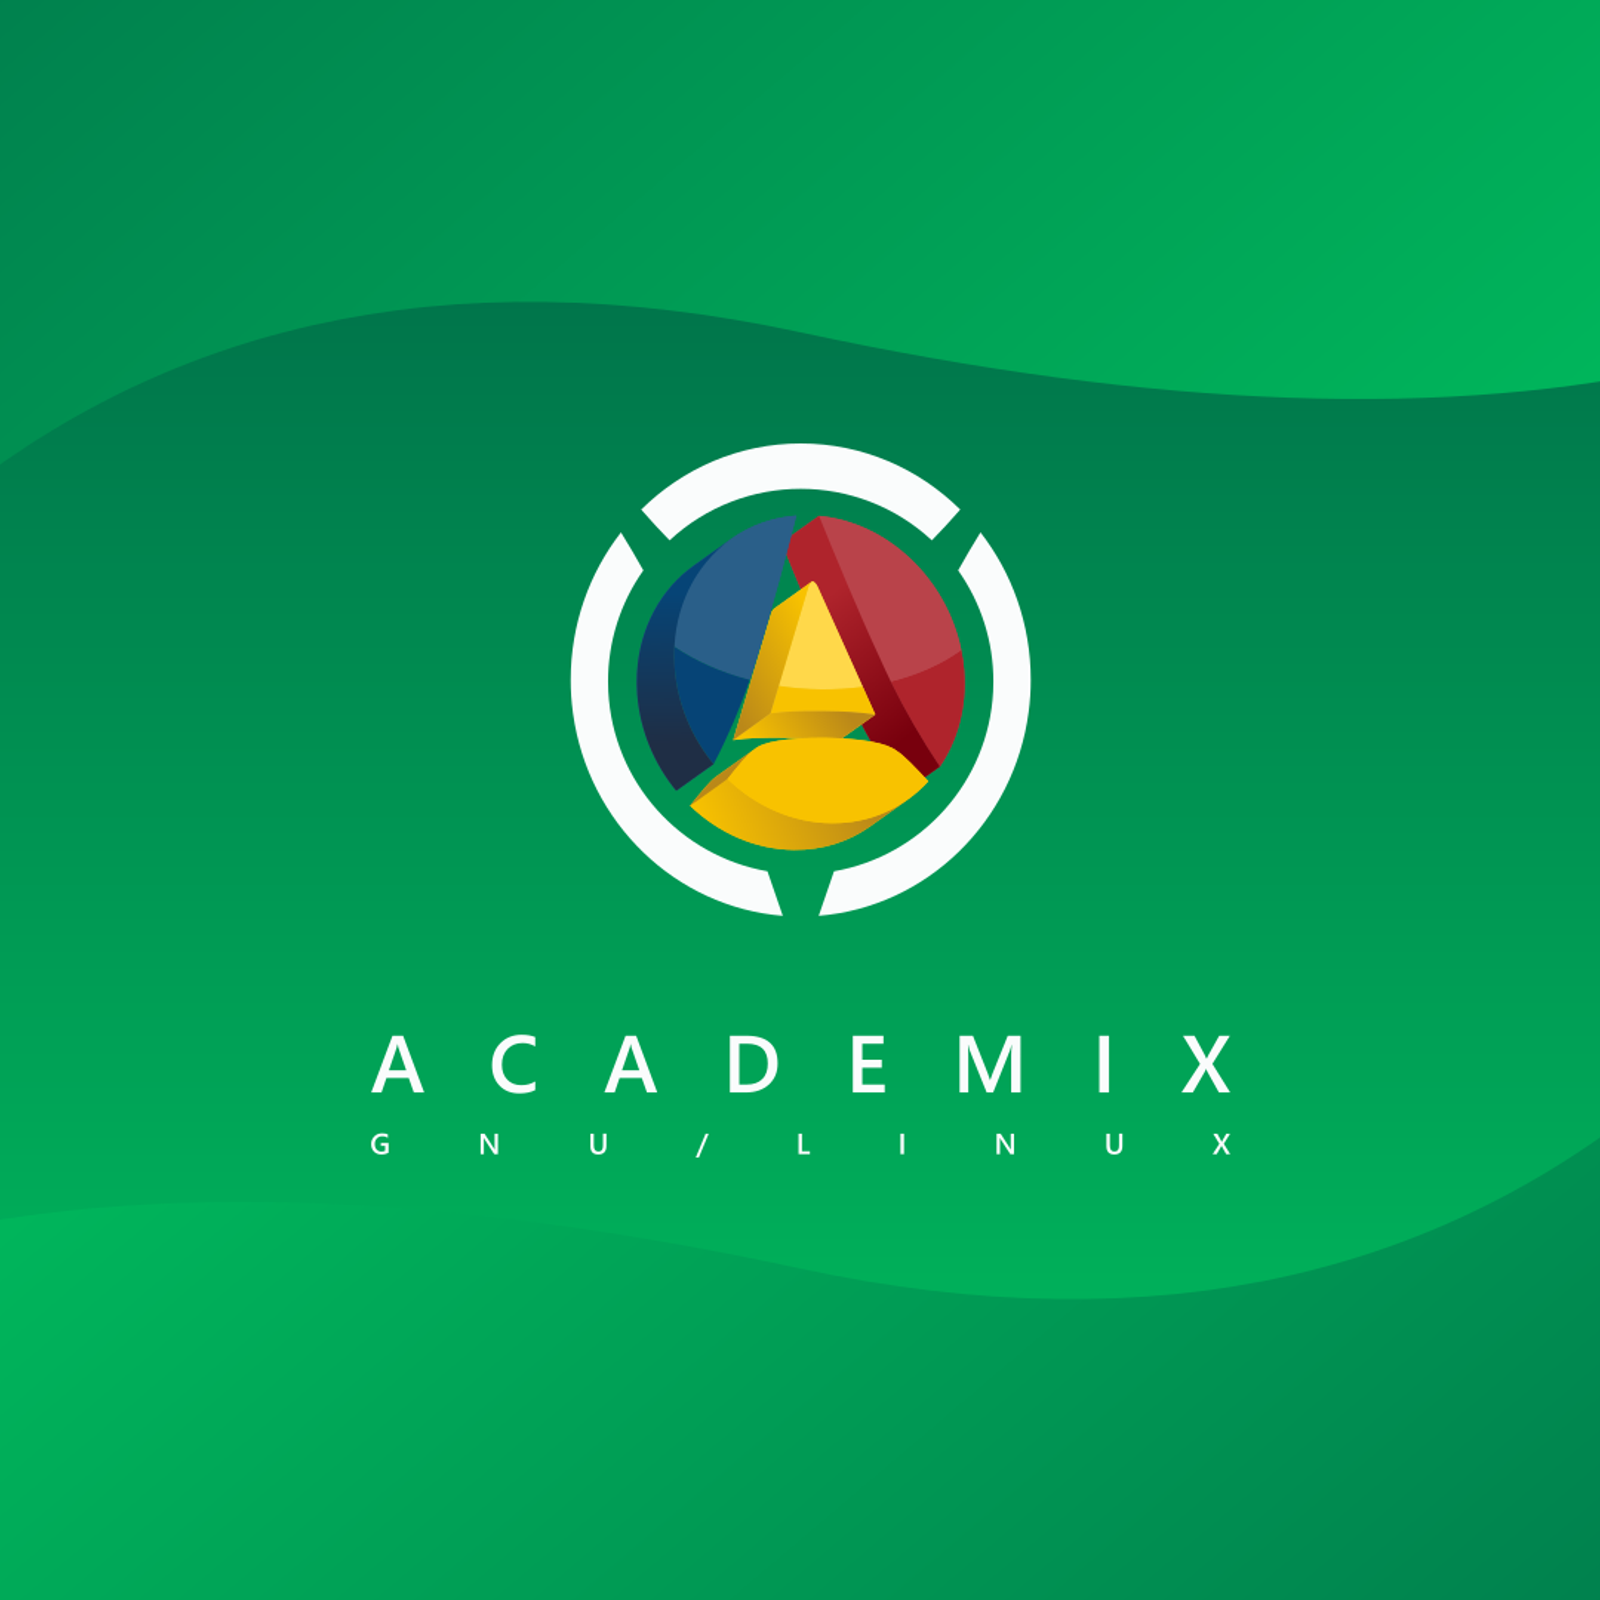 Academix Gnu Linux Alternatives And Similar Software Images, Photos, Reviews